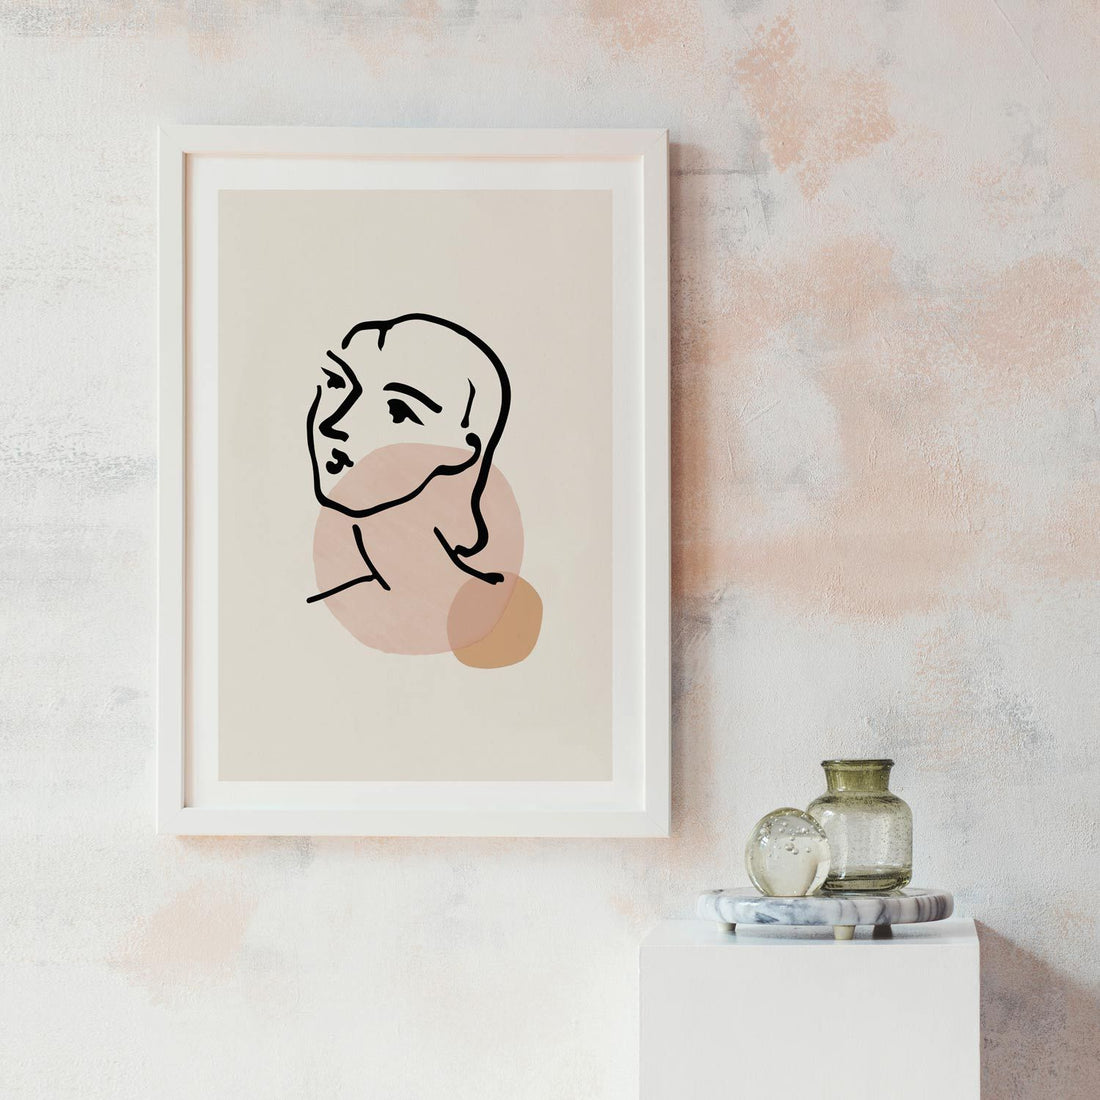 Woman face silhouette print